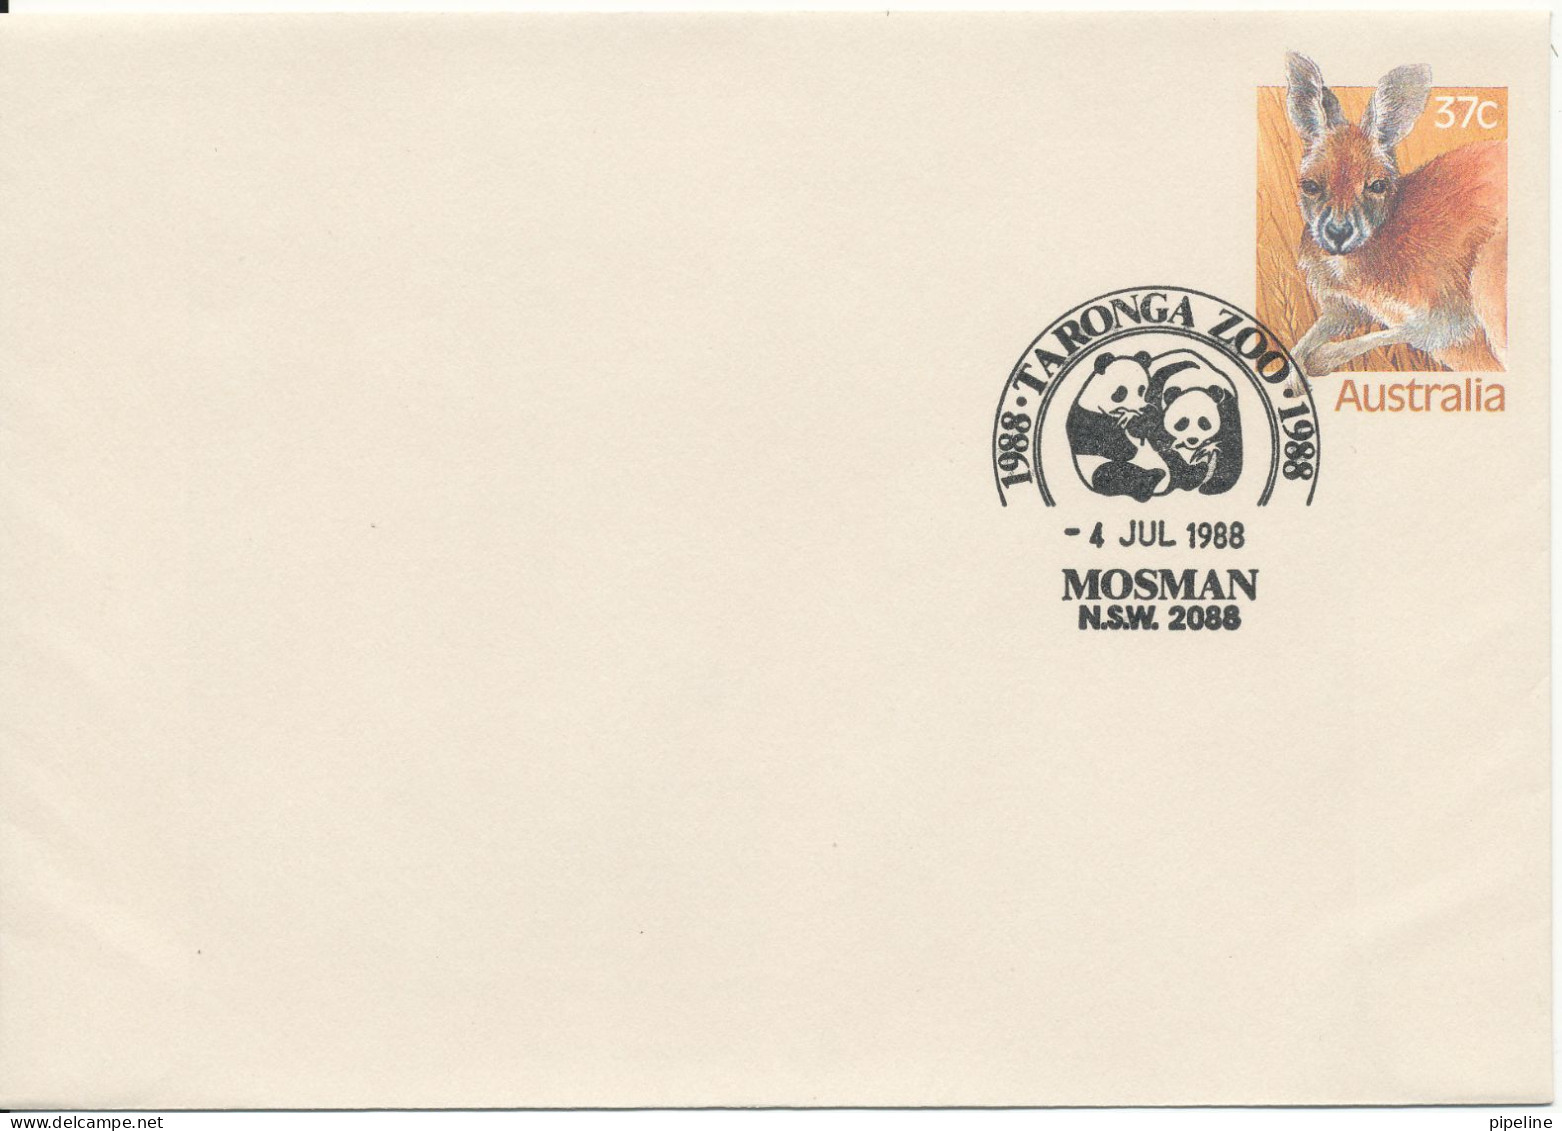 Australia Postal Stationery Cover 100 Anniversary Taronga Zoo Mosman 4-7-1998 With PANDA In The Postmark - Entiers Postaux